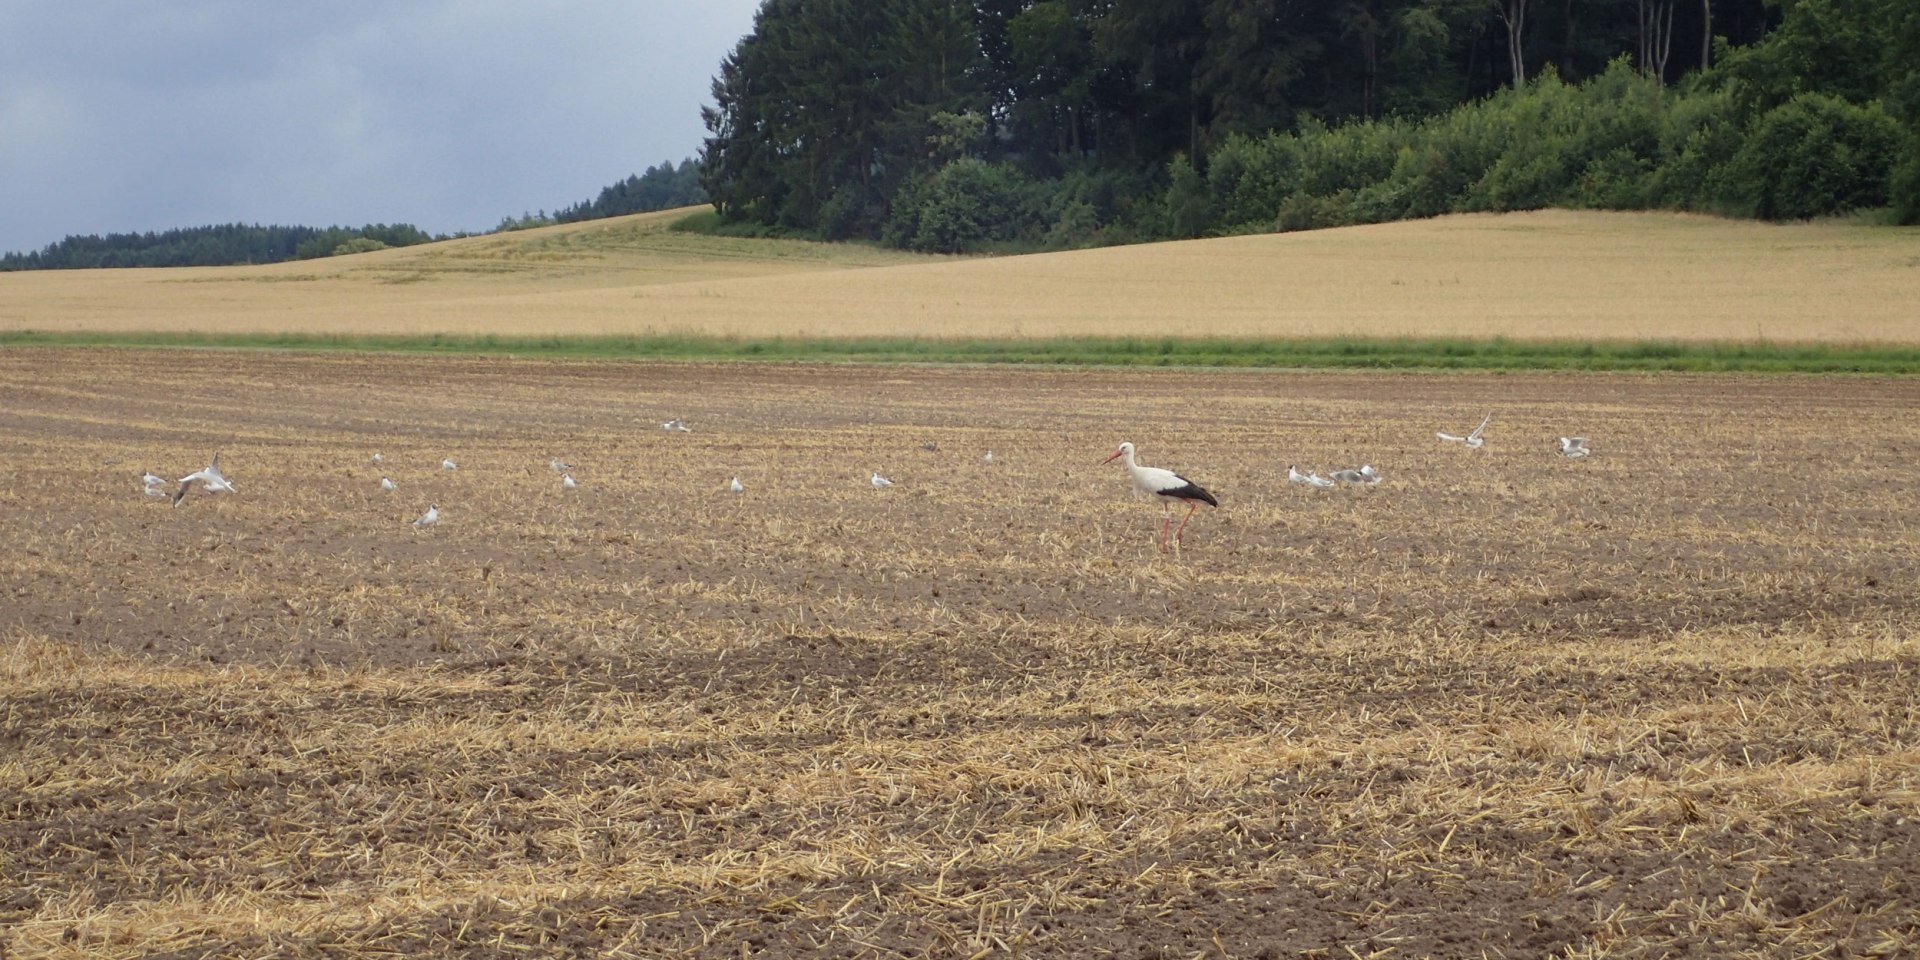 Ein Storch auf dem Feld, © Tourismusverband Osnabrücker Land e.V.